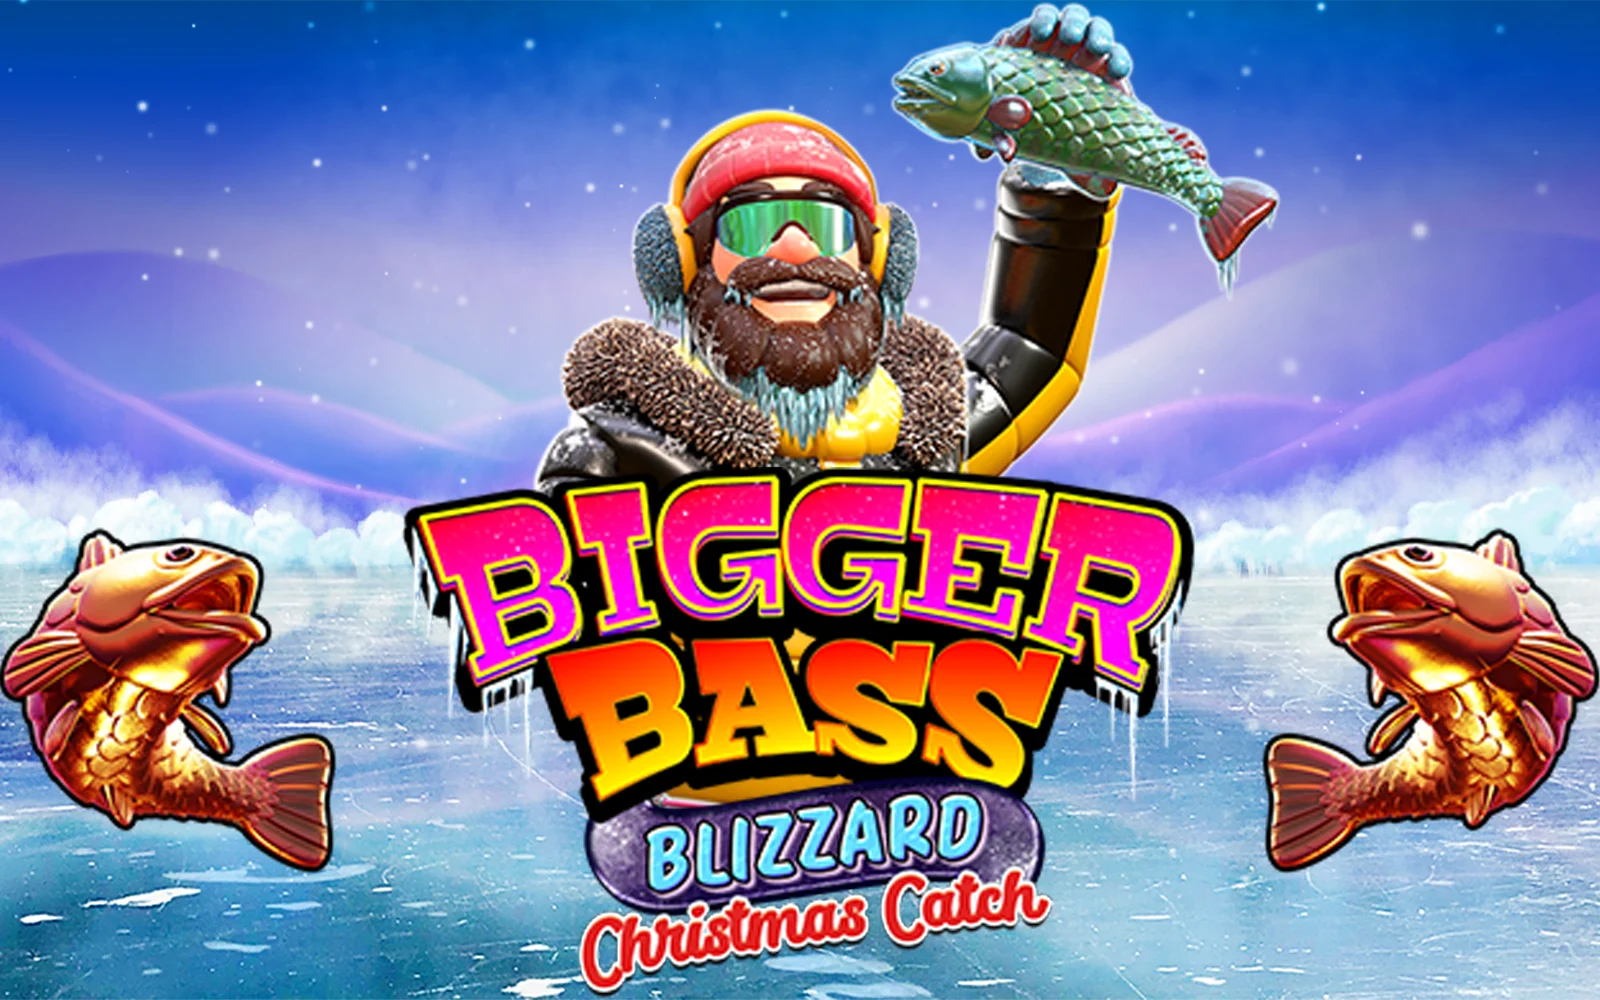 Juega a Bigger Bass Blizzard - Christmas Catch™ en el casino en línea de Starcasino.be